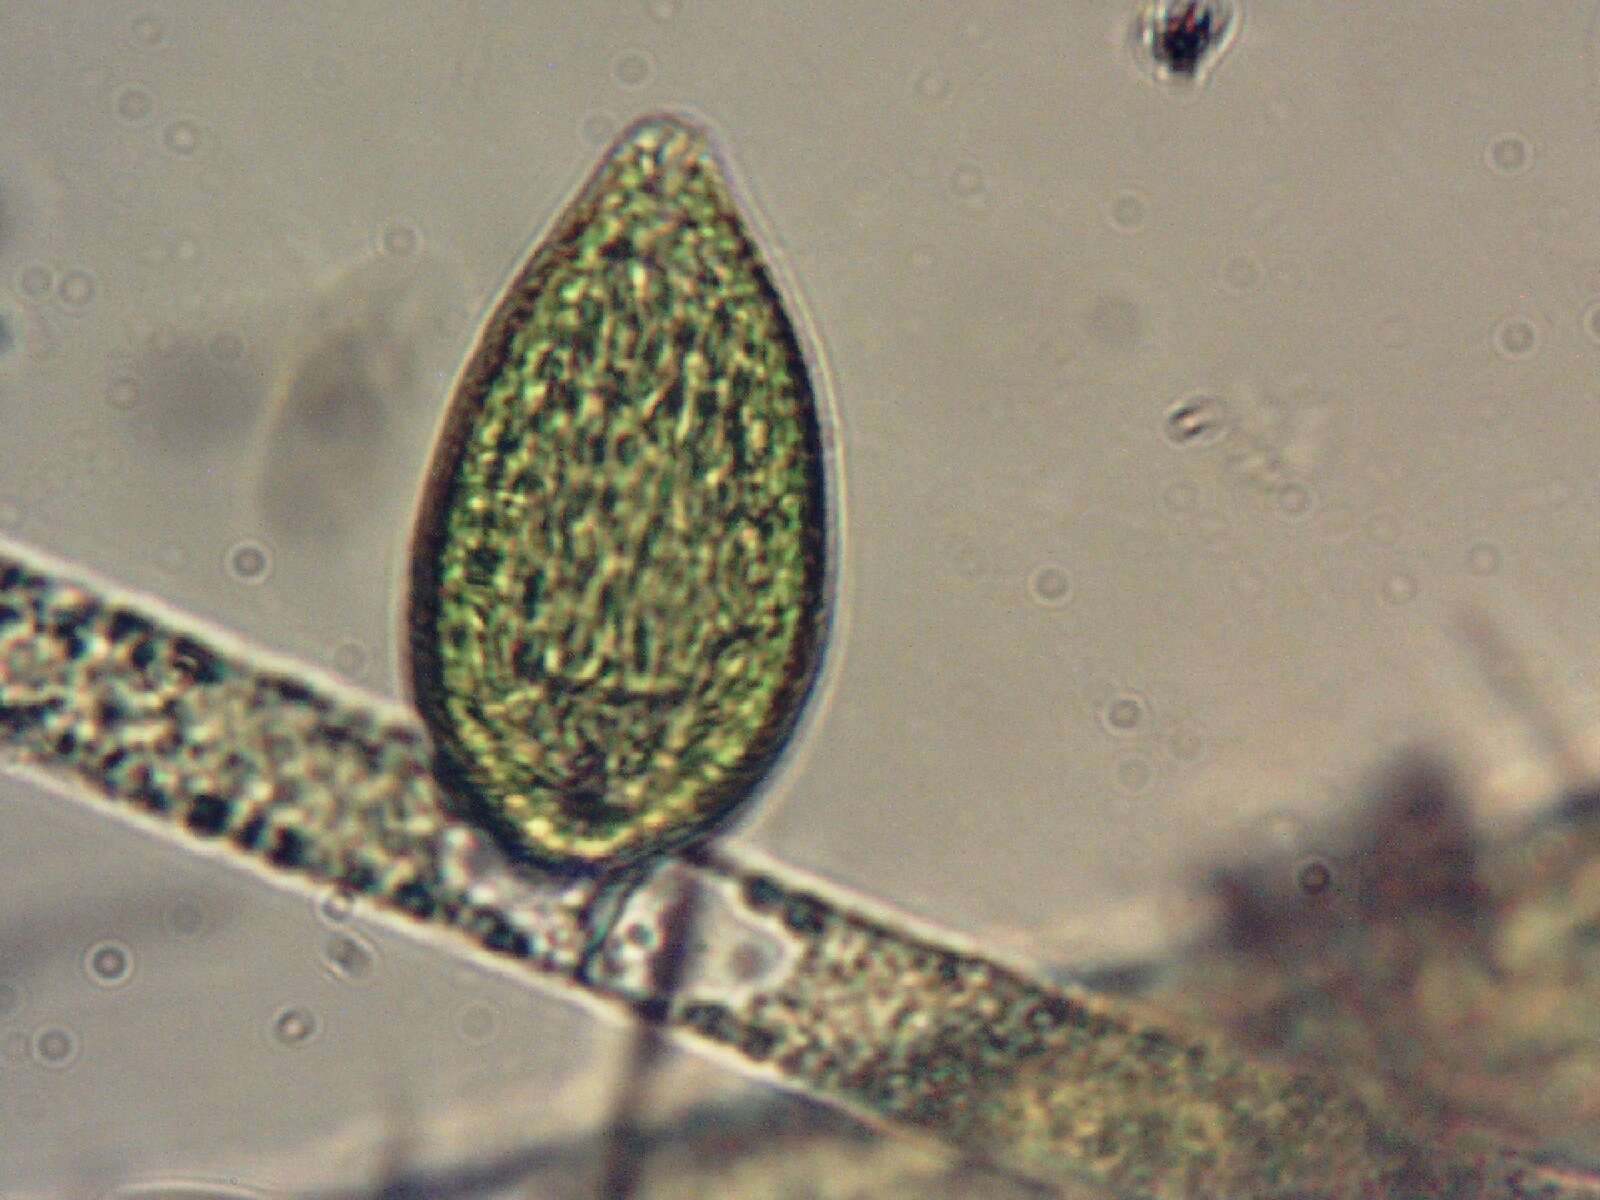 Image of Gonyostomum semen